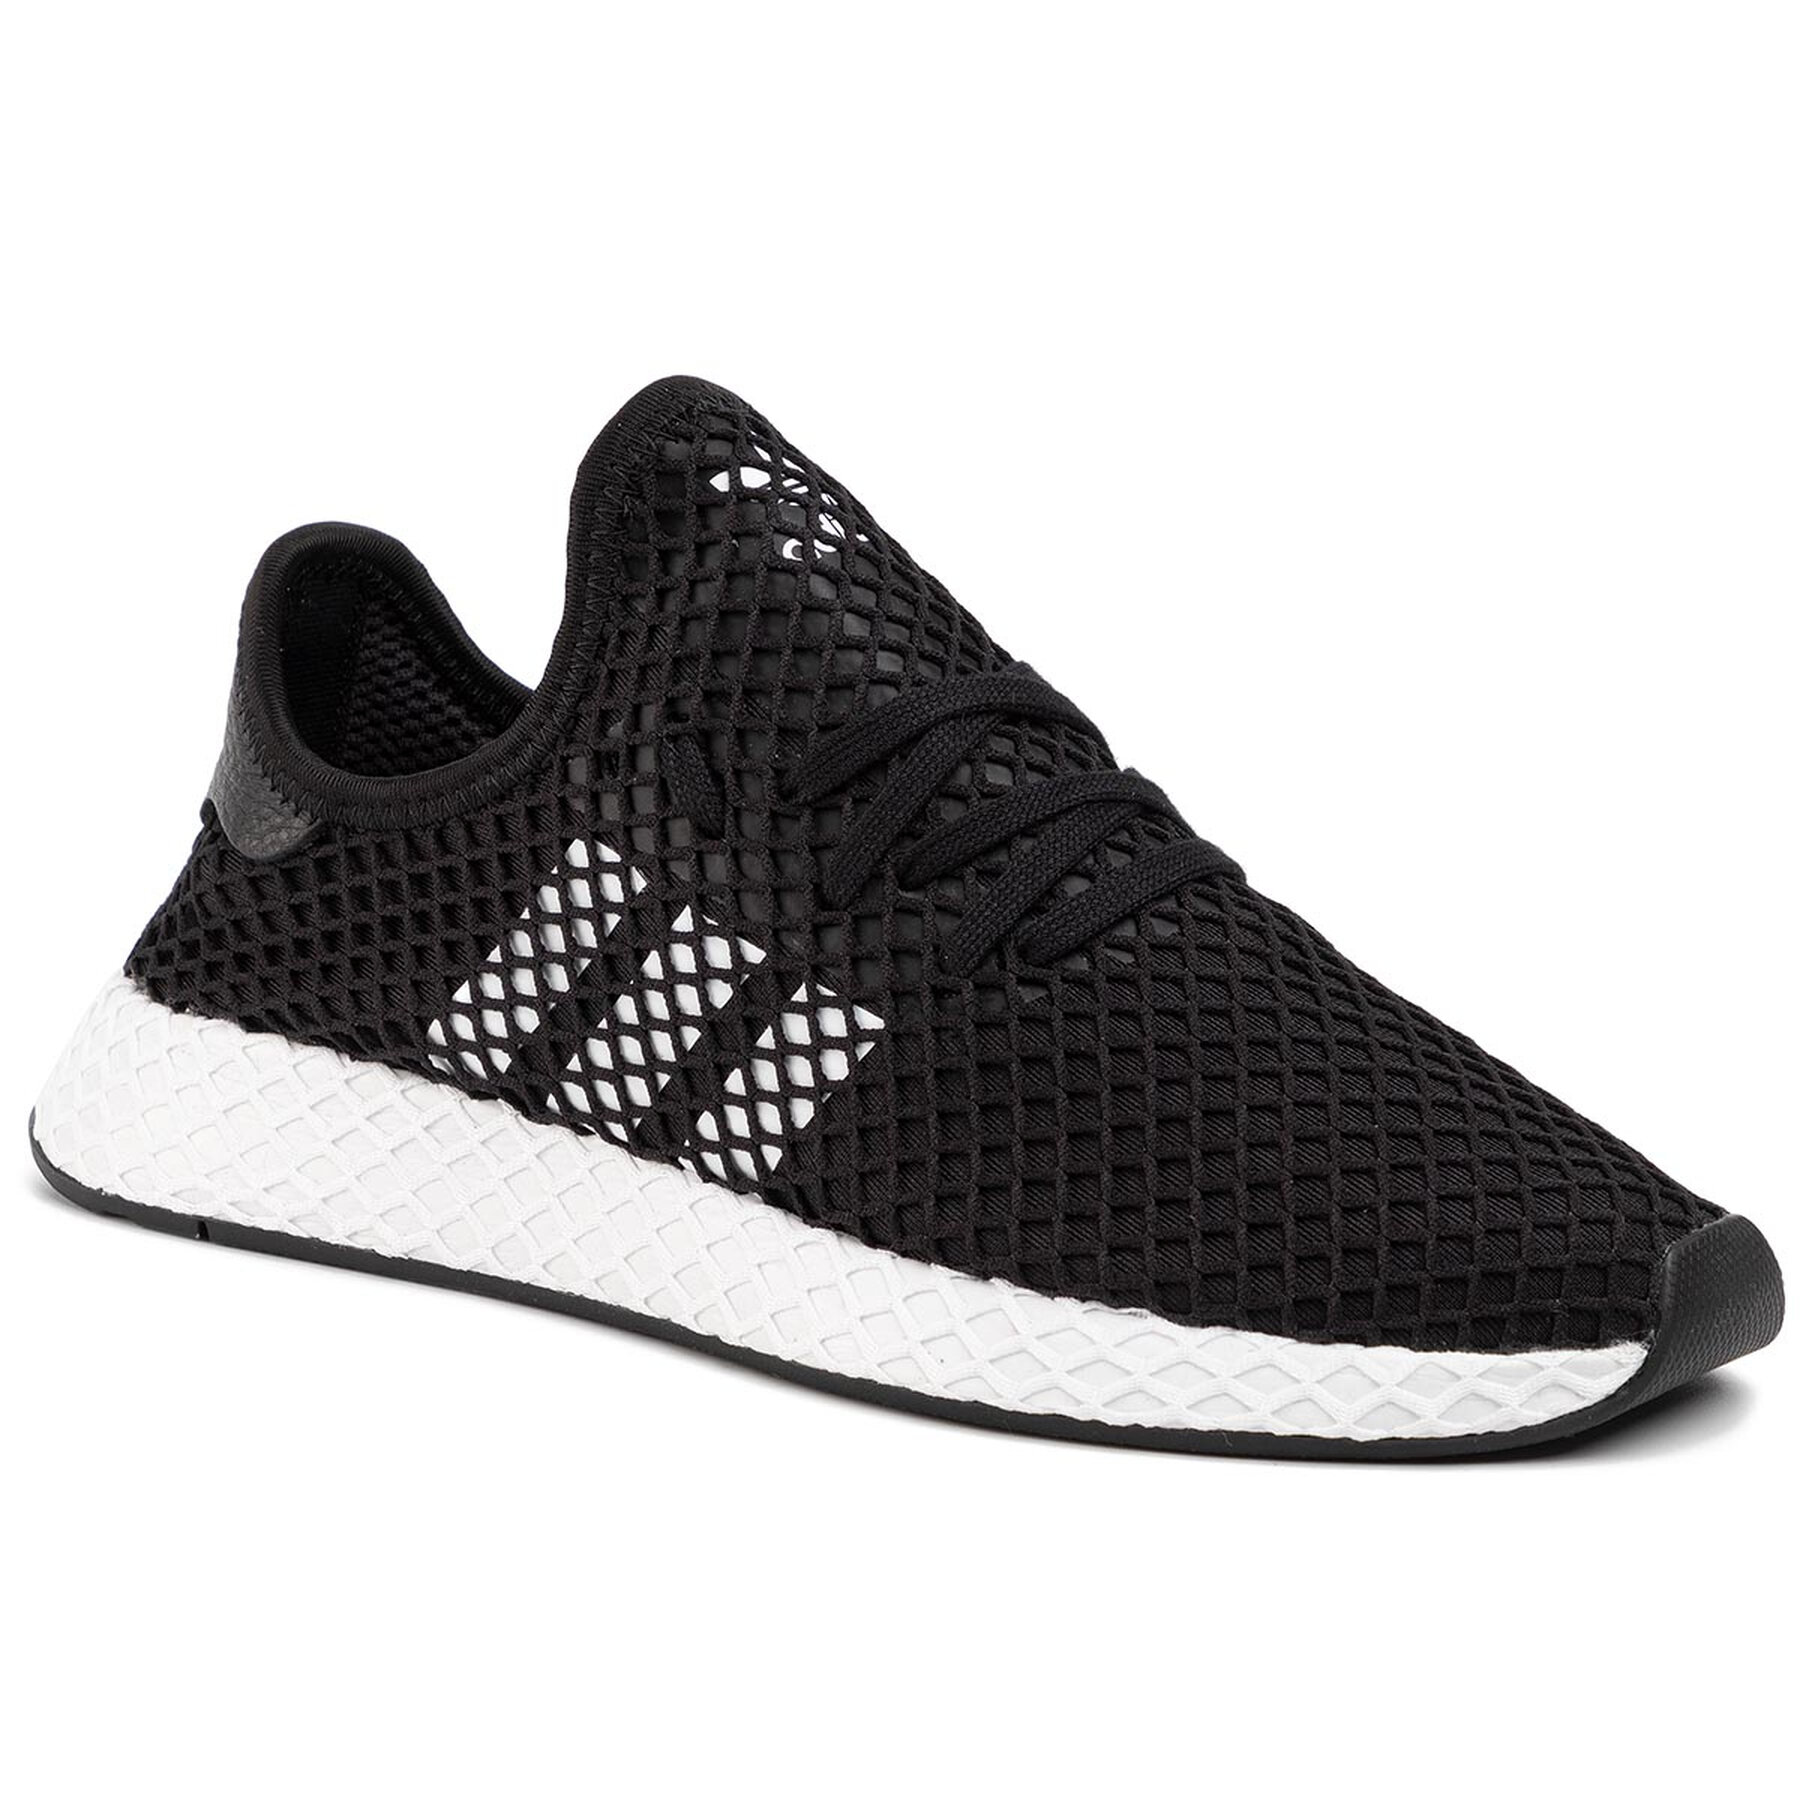 Comprar en oferta Adidas Deerupt Runner core black/ftwr white/core black